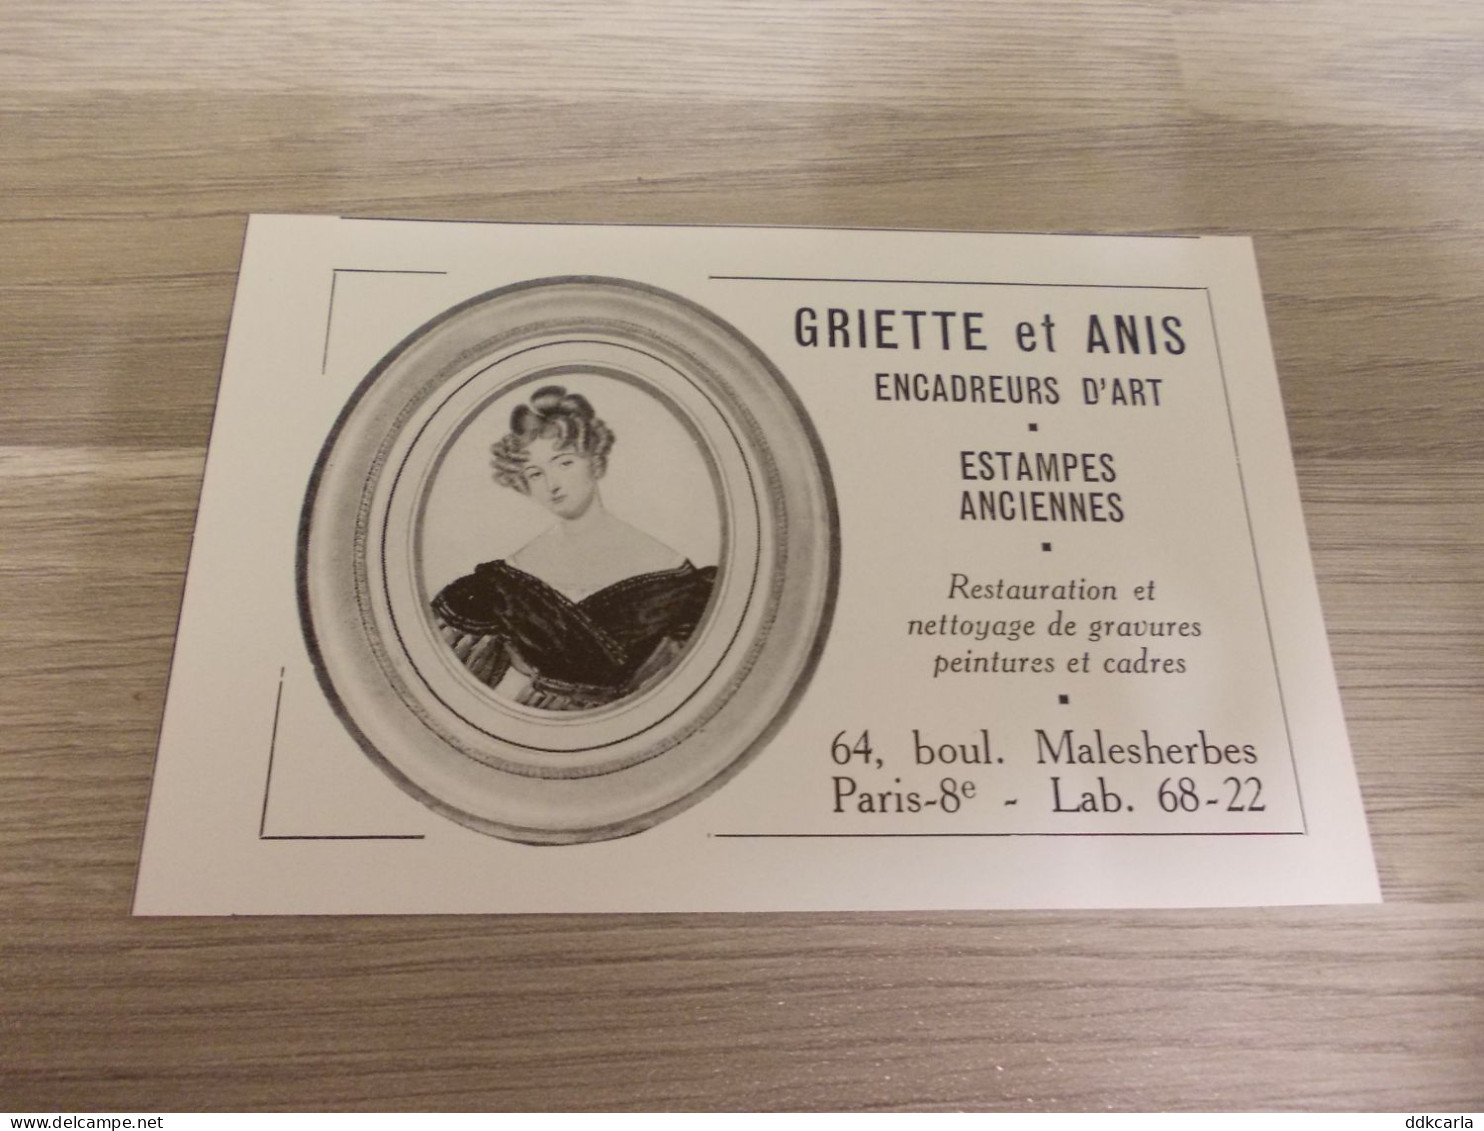 Reclame Advertentie Uit Oud Tijdschrift 1956 - Griette Et Anis Encadreurs D'Art - Malesherbes Paris - Publicidad